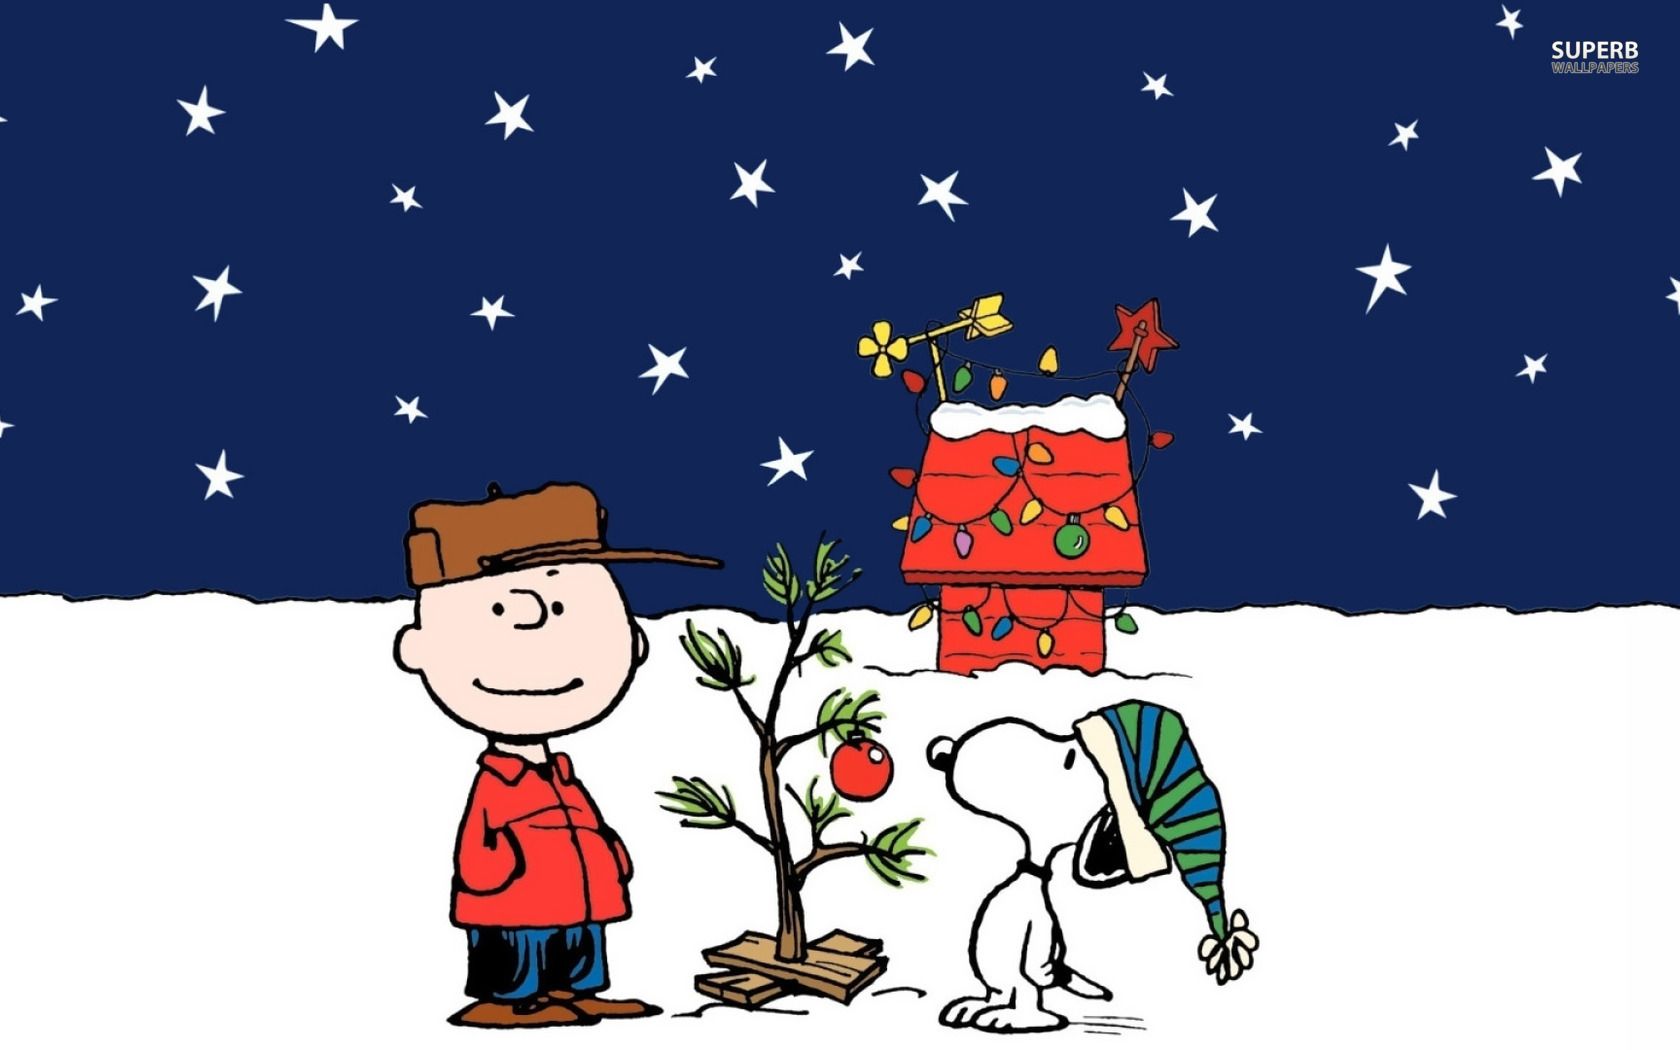 A Charlie Brown Christmas wallpaper - Cartoon wallpapers -